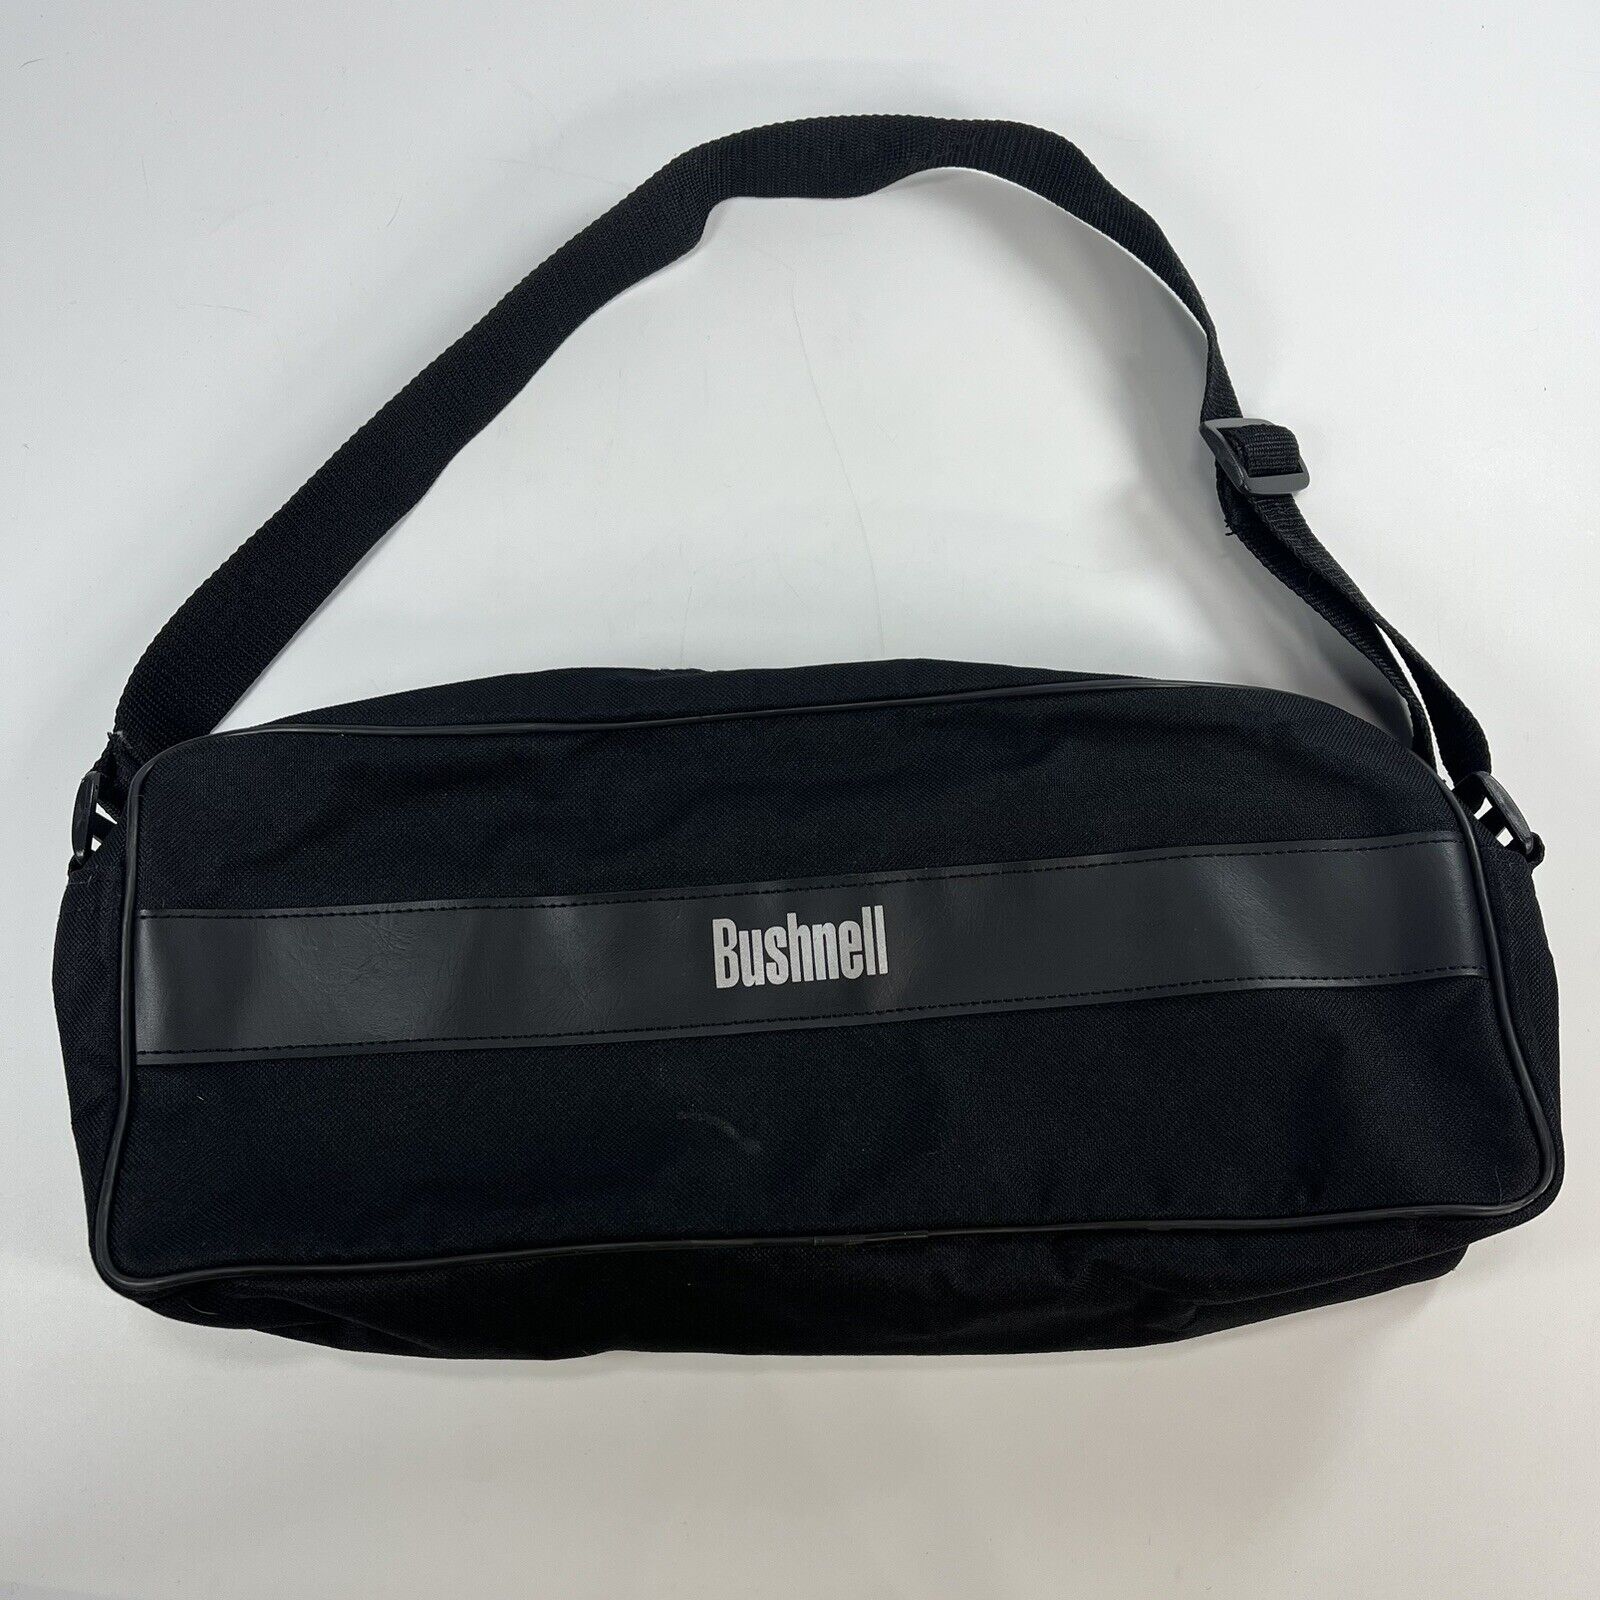 Bushnell Scope Tripod Carrying Bag 15 X 6 X 3.5 Black Rectangle Strap